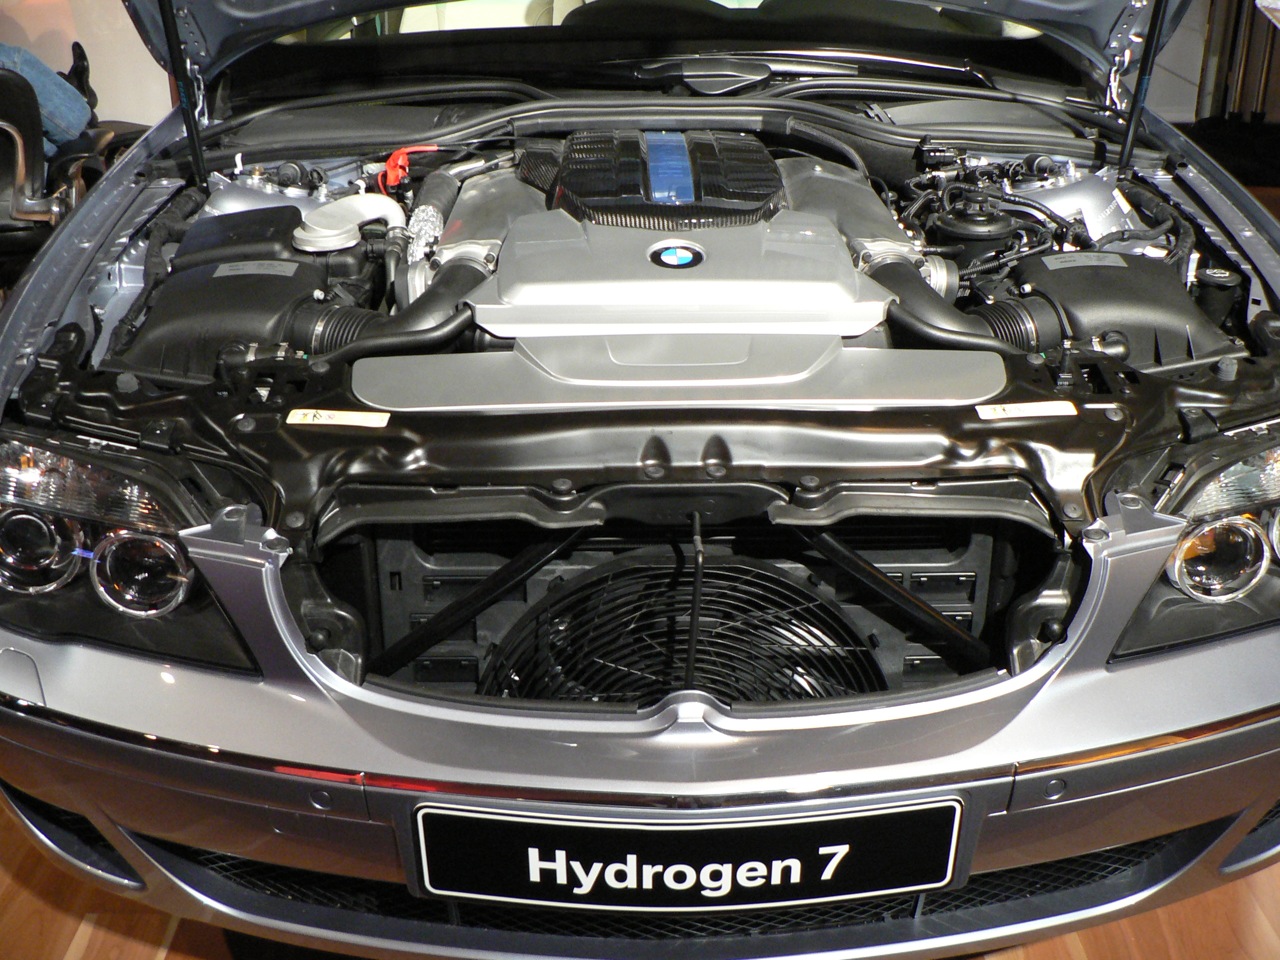 File:BMW Hydrogen 7 Engine.jpg - Wikimedia Commons